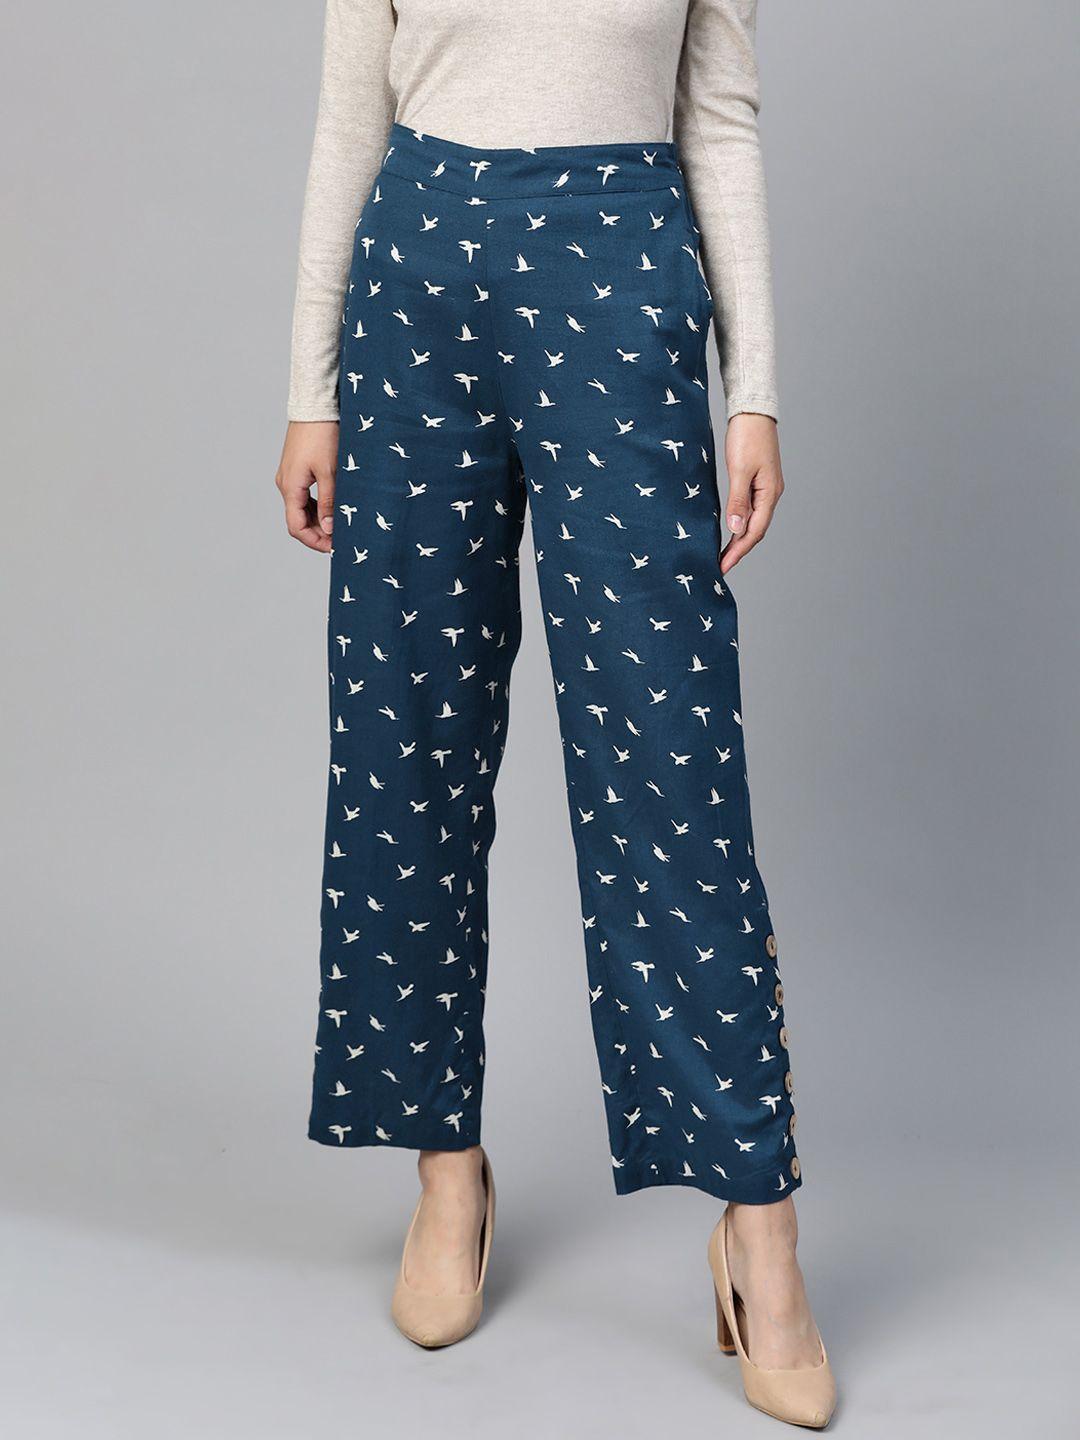 shae by sassafras women navy blue & white regular fit bird print parallel trousers